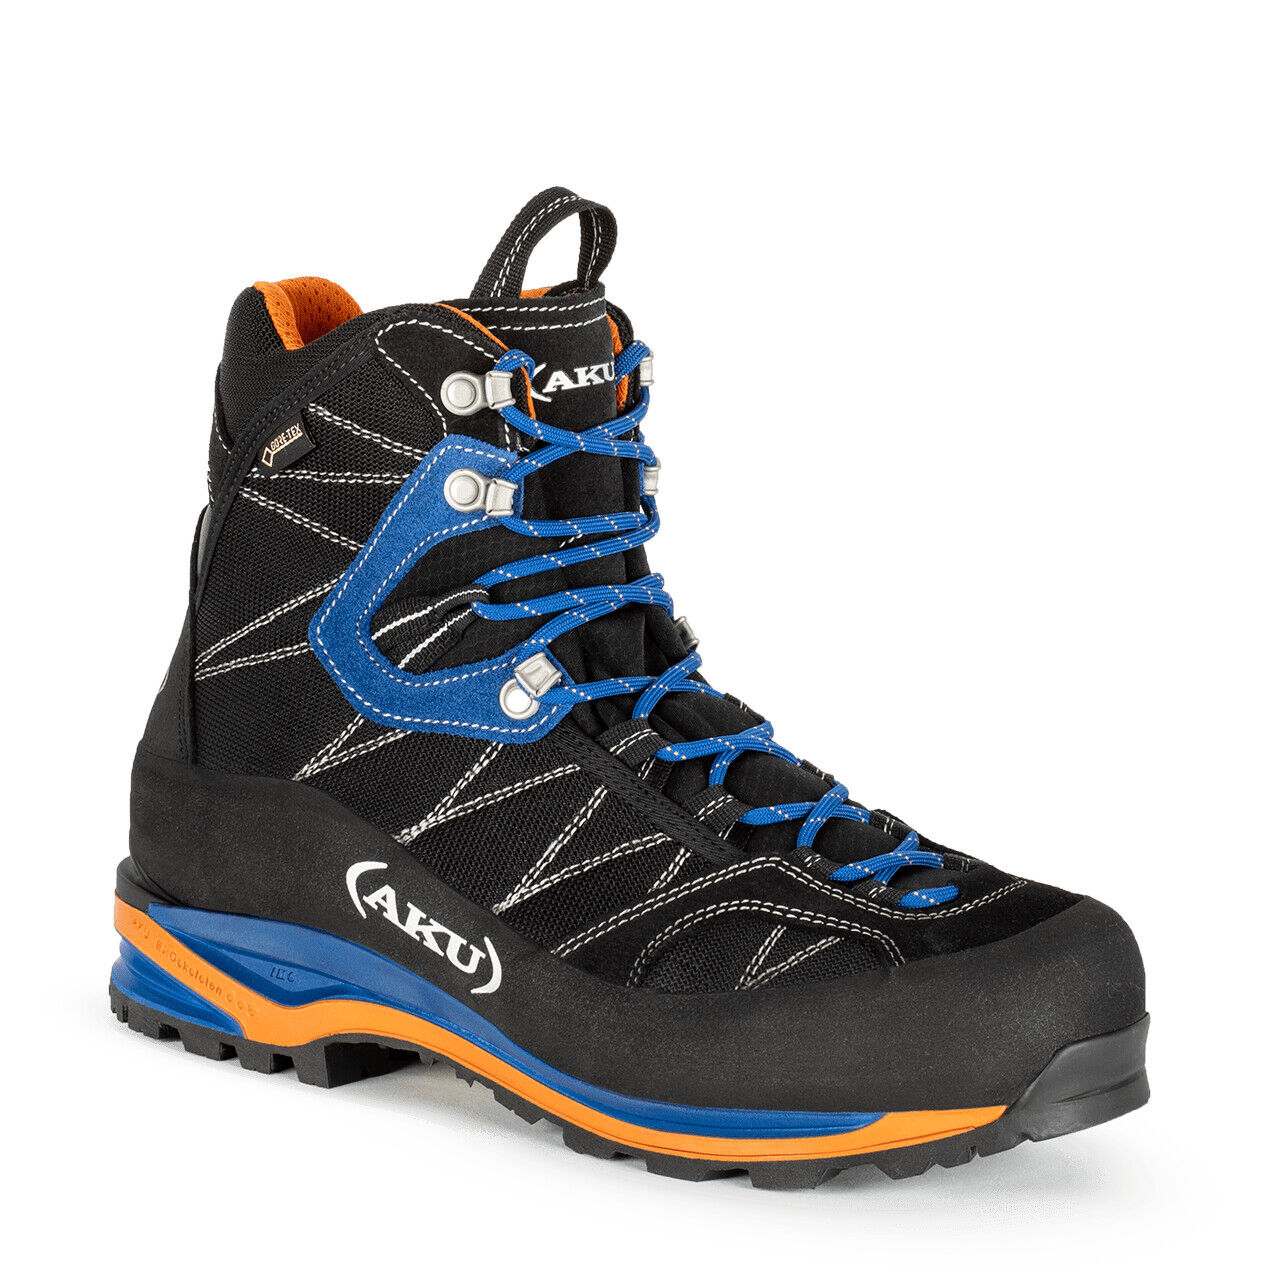 Aku Tengu GTX - Mountaineering boots - Men's